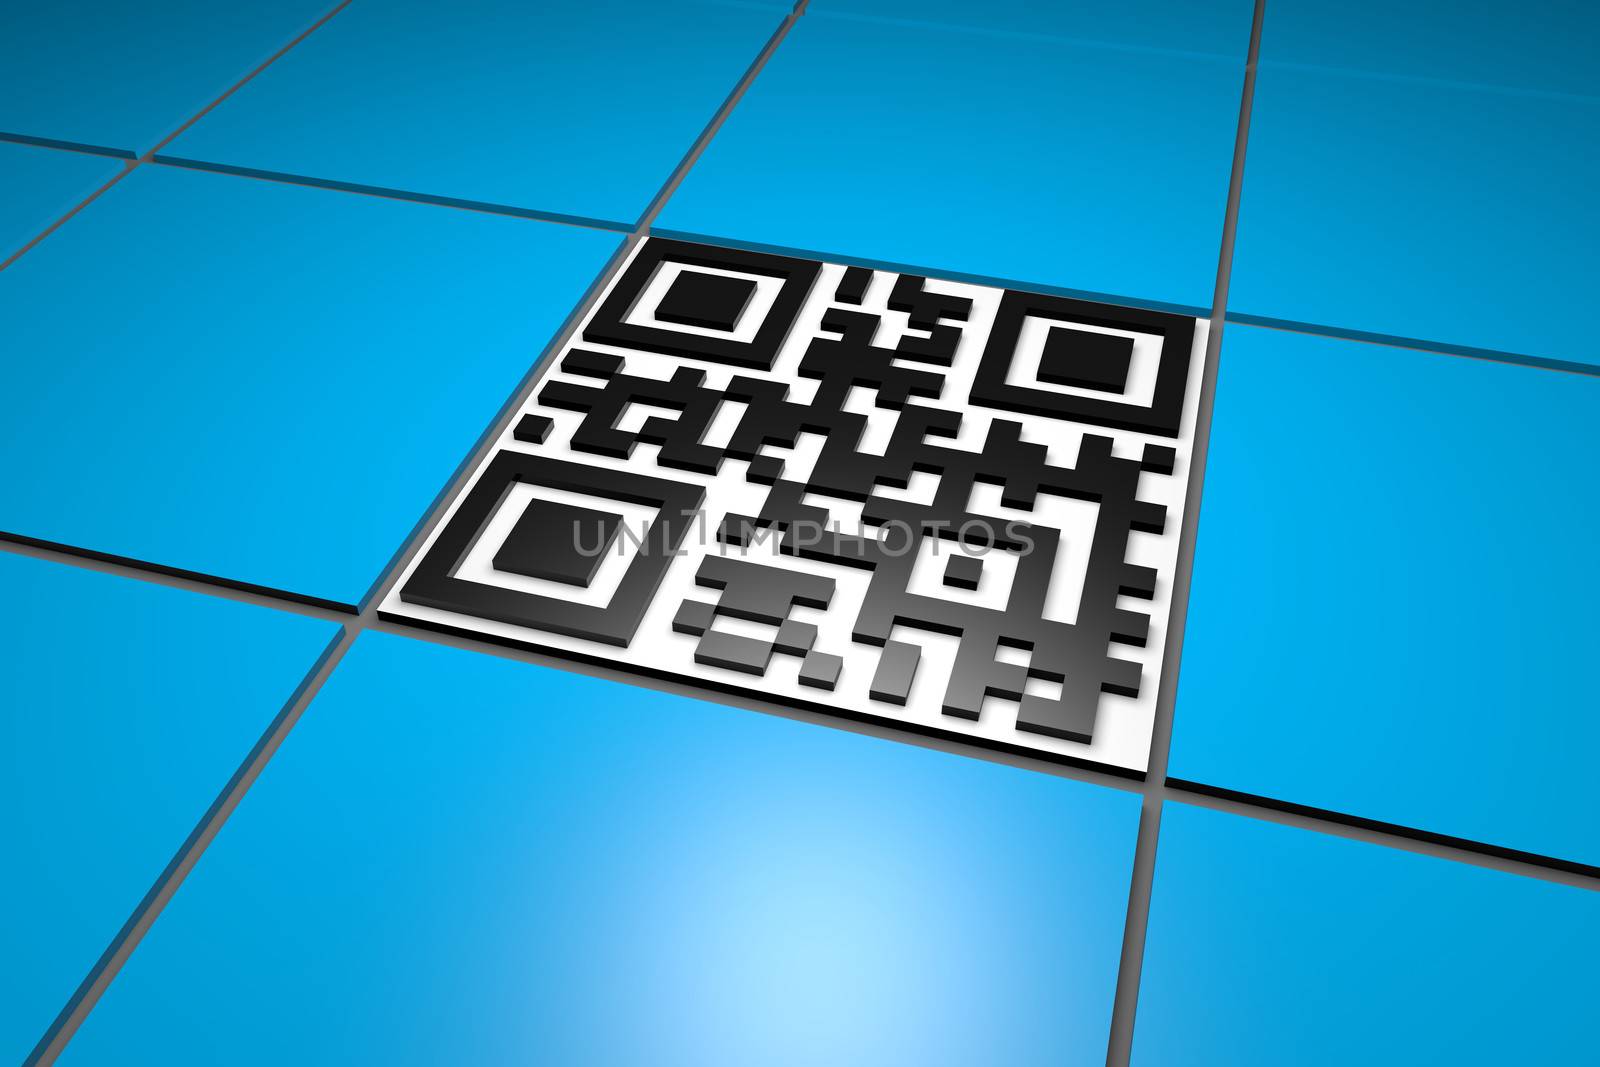 3D QR Code Tile among Blue Tiles Illustration